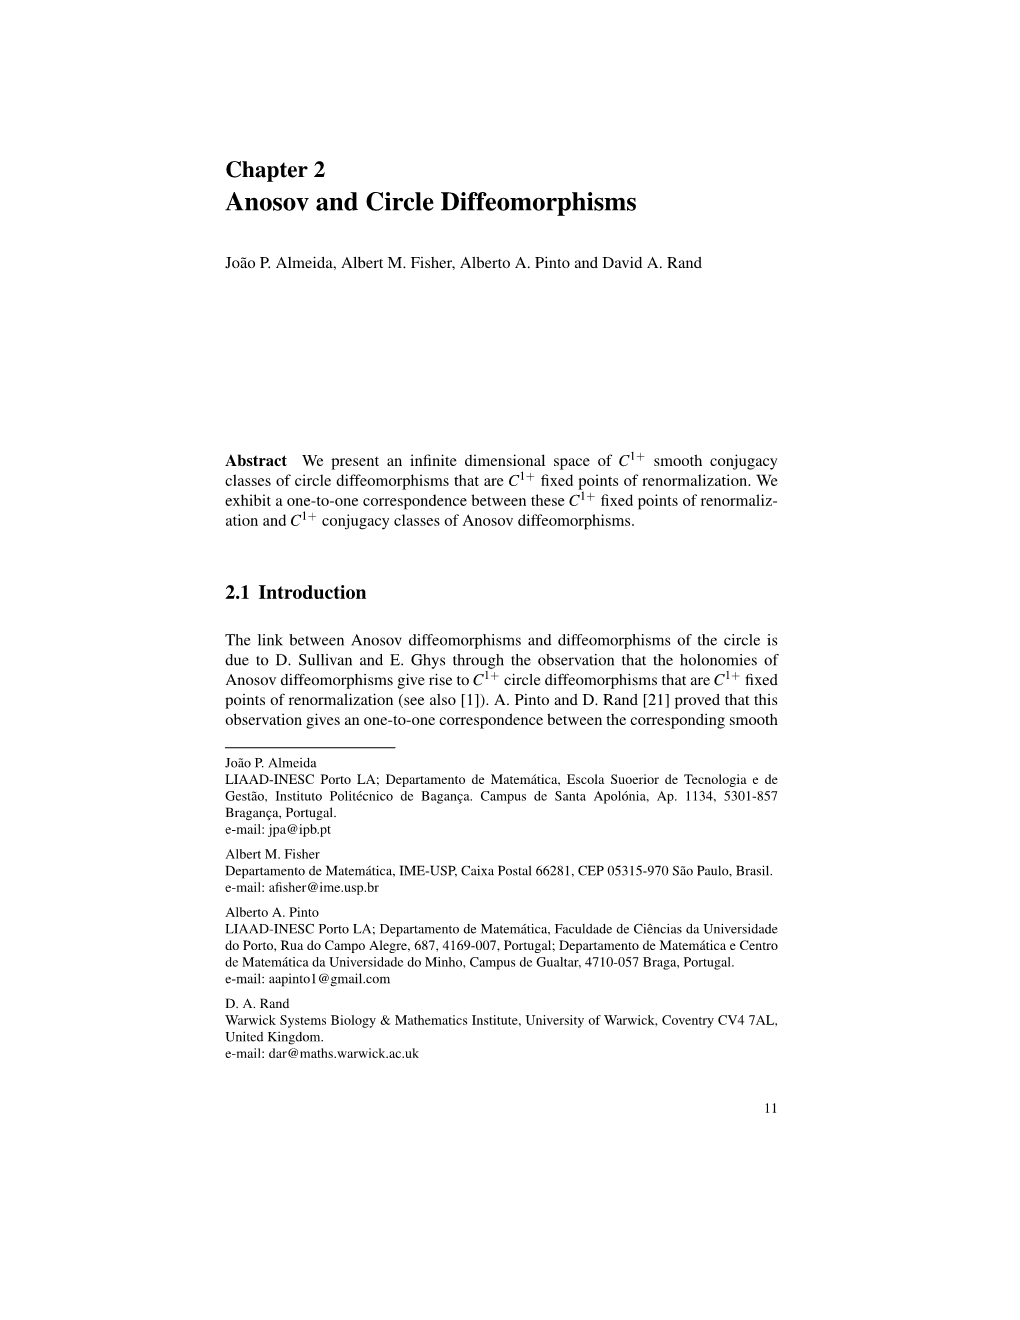 Anosov and Circle Diffeomorphisms